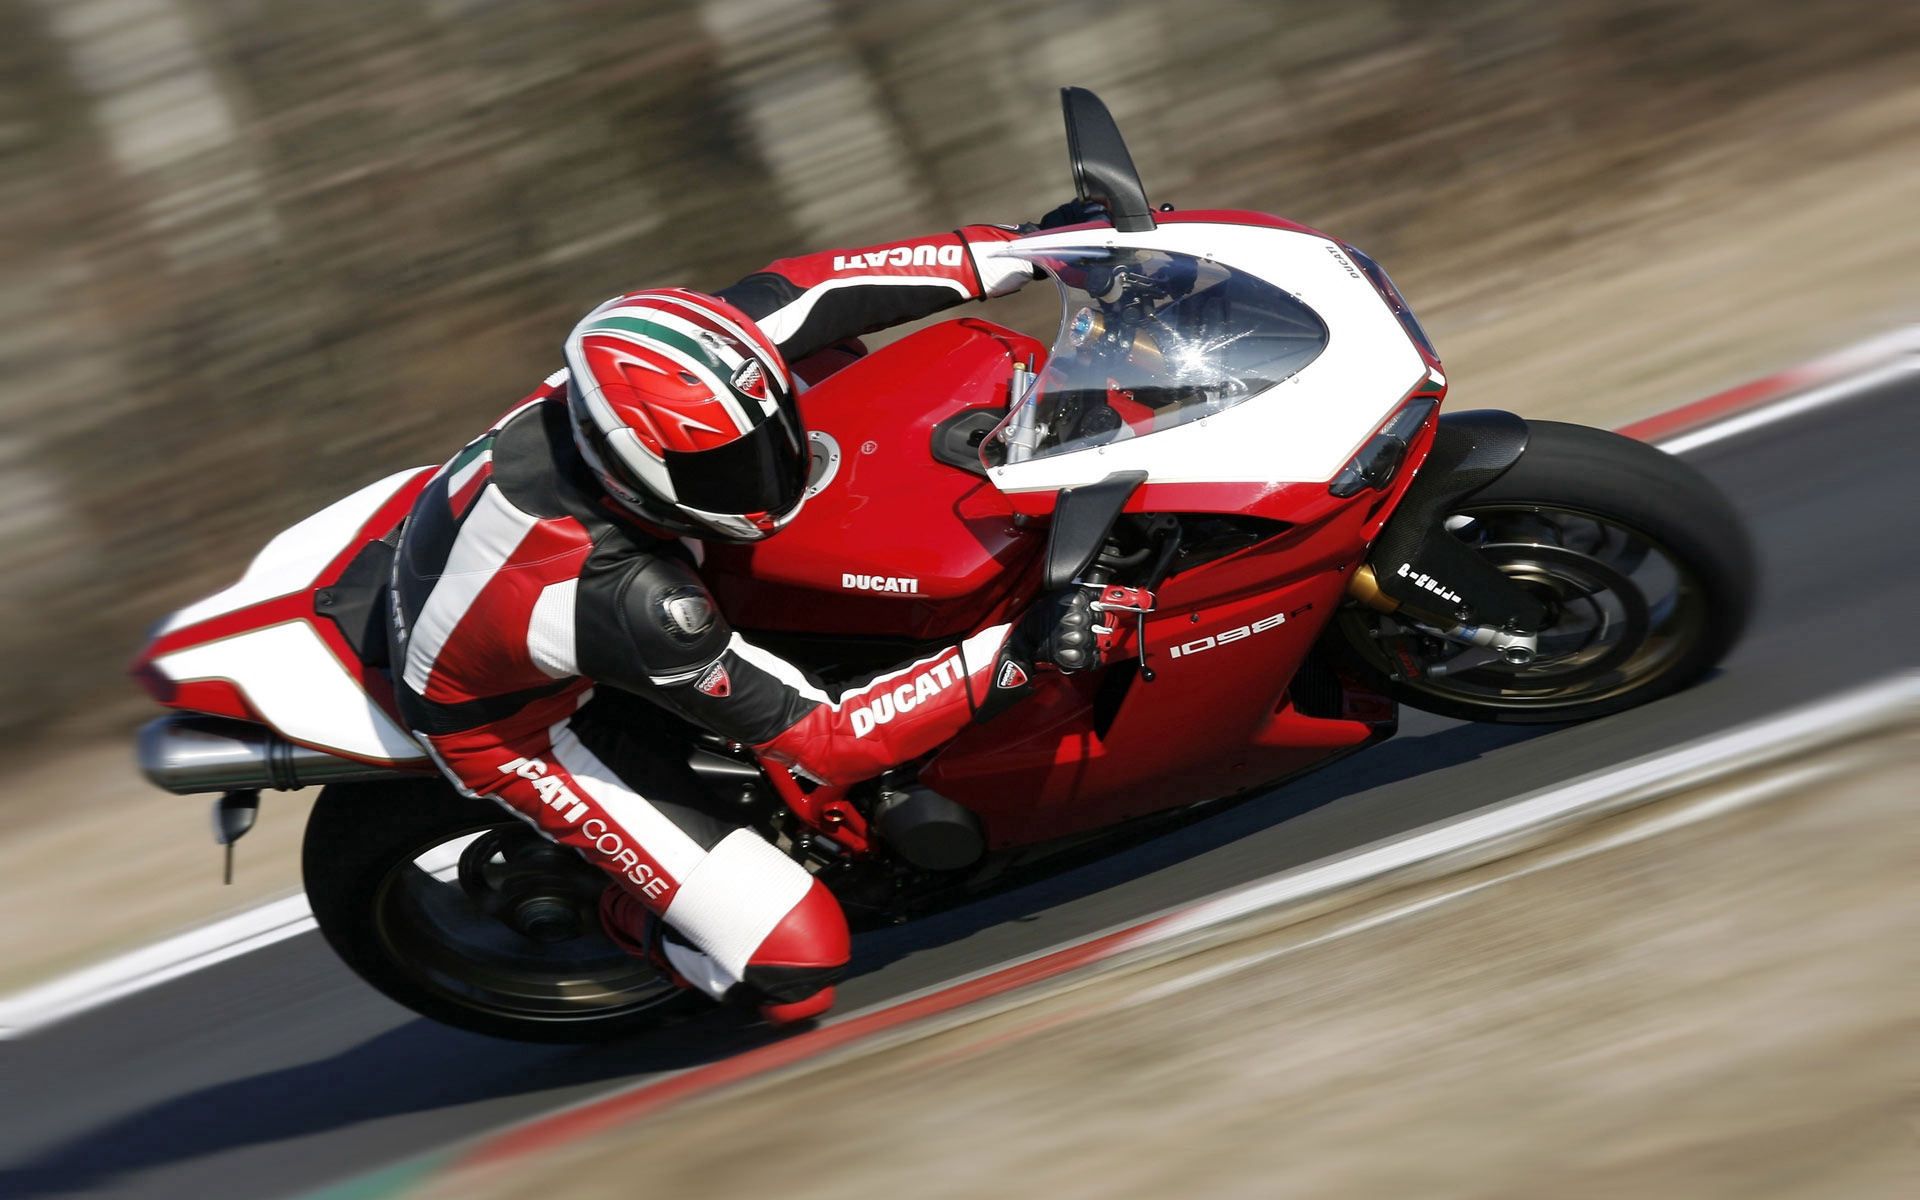 ducati, motorcycles, red, motobike, motorbike, ducati 1098, in move, afoot